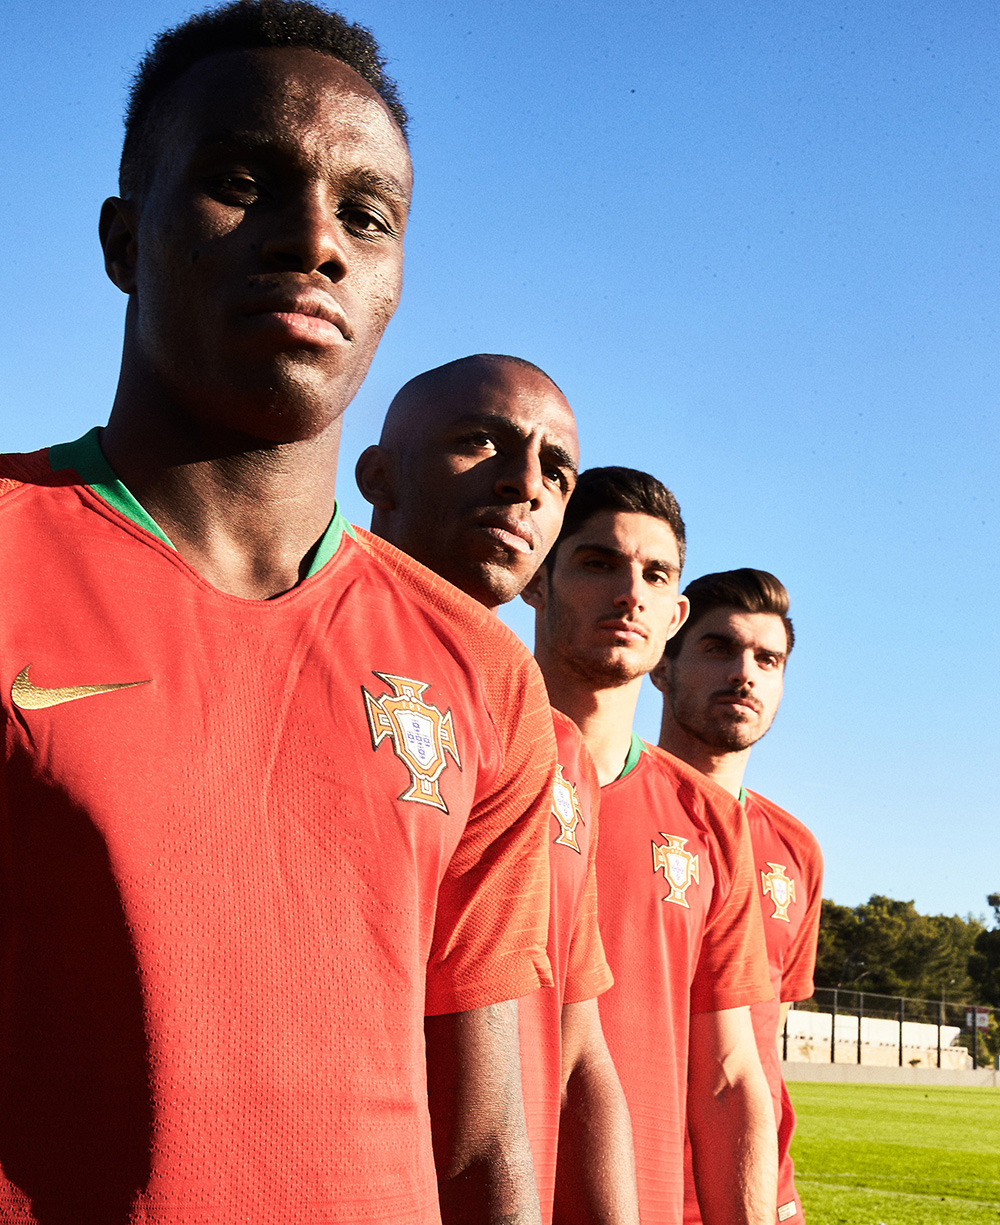 Portugal 2018 World Cup Nike Kits